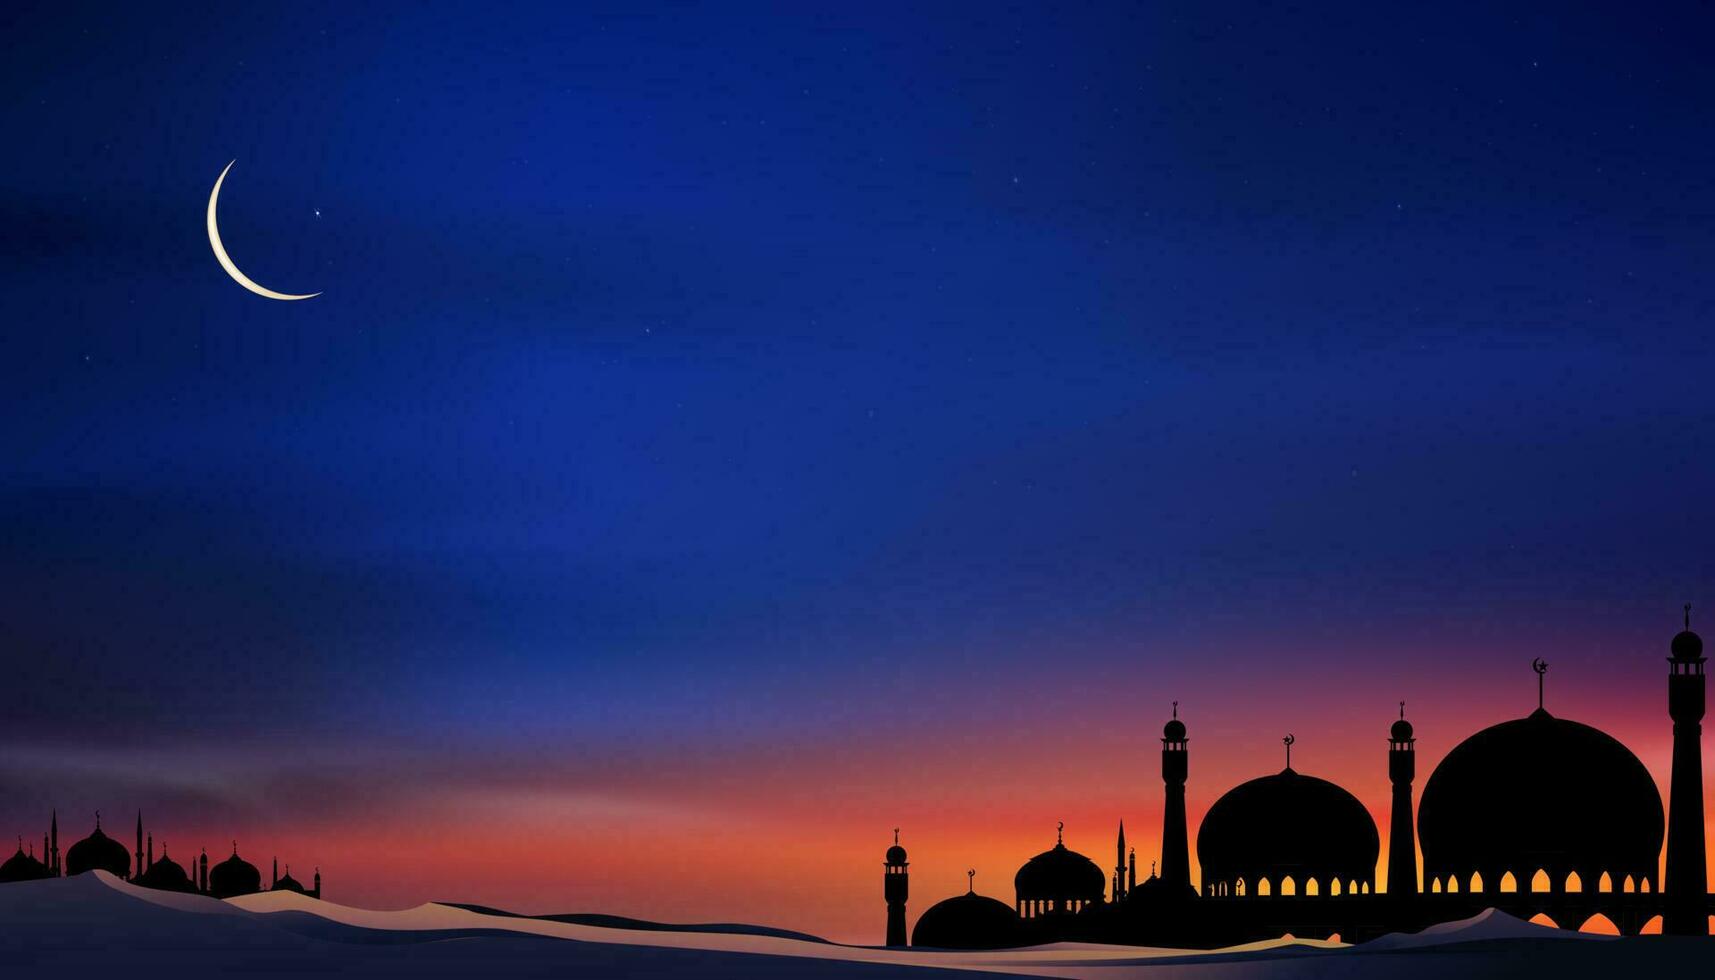 carta islamica con moschee a cupola silhouette, luna crescente su sfondo arancione cielo, notte vetor ramadhan con cielo al crepuscolo per la religione islamica, eid al-adha, eid mubarak, eid al fitr, ramadan kareem vettore